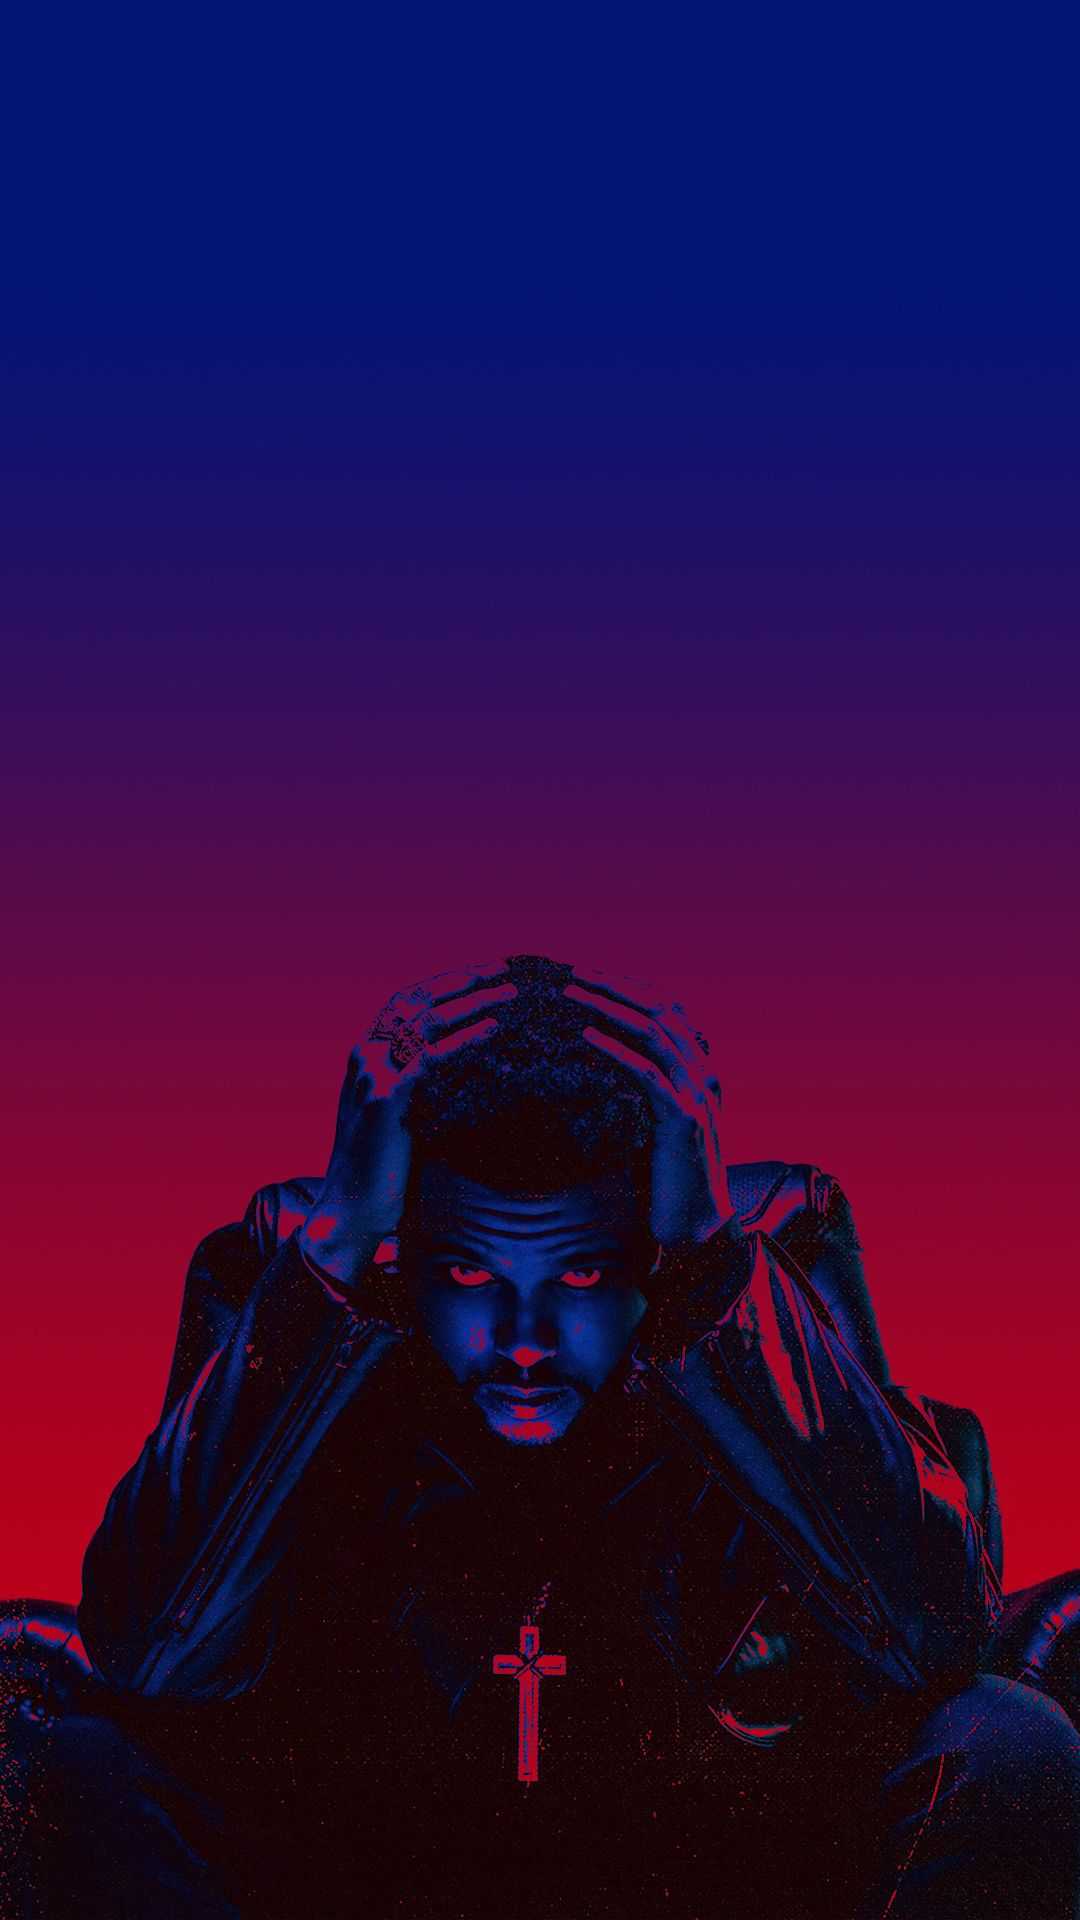 50+] The Weeknd Wallpaper Tumblr - WallpaperSafari